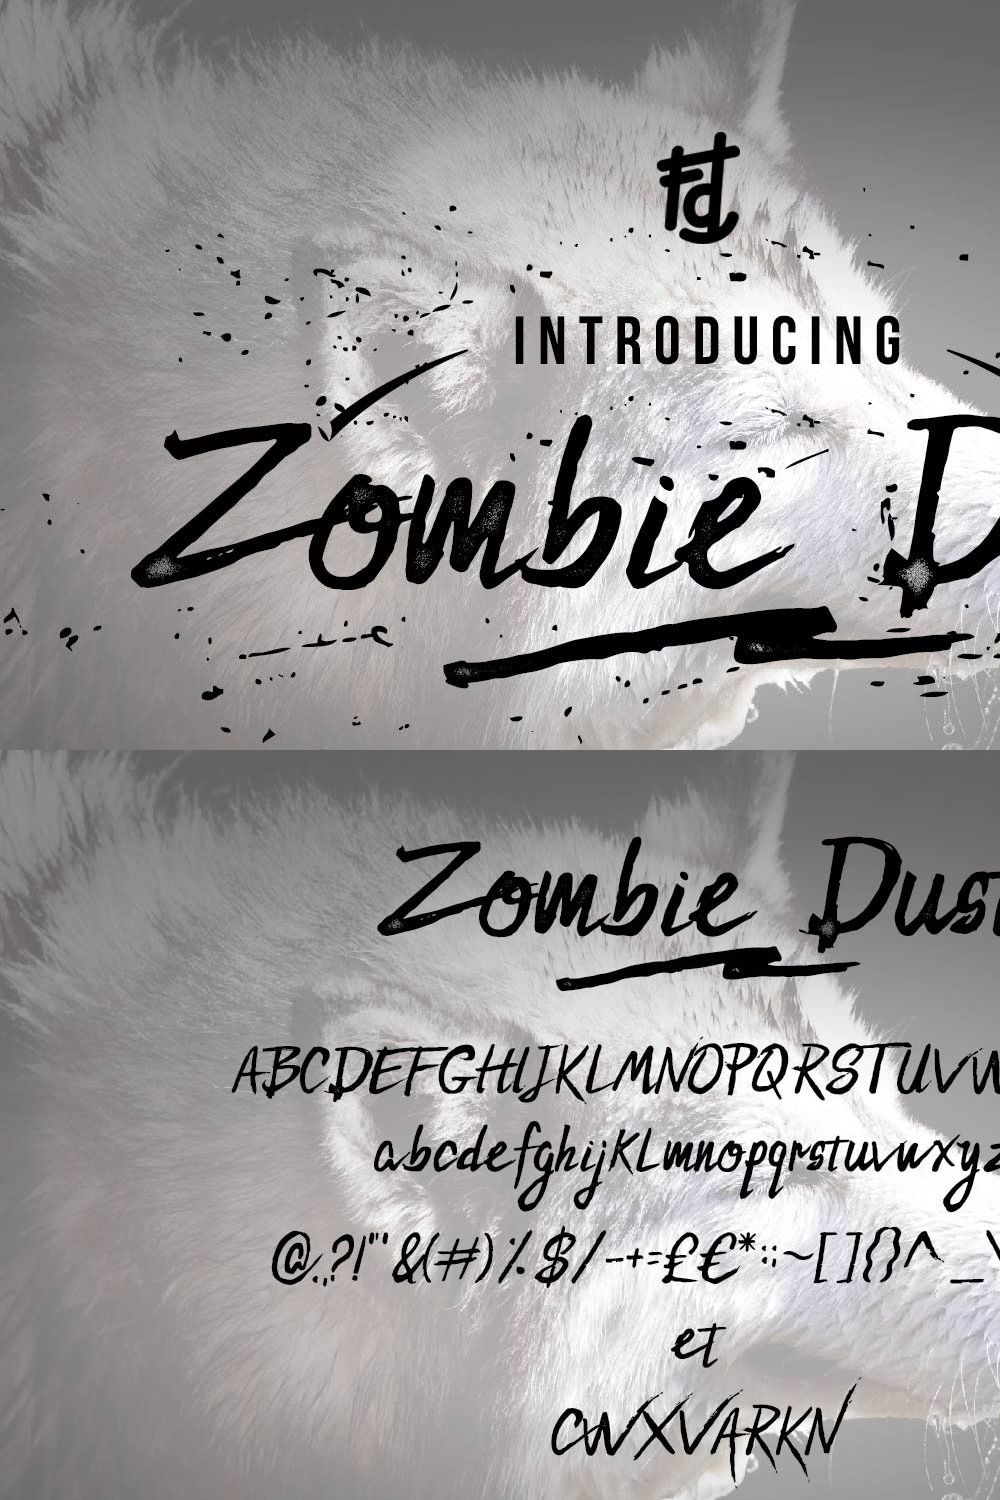 Zombie Dust pinterest preview image.